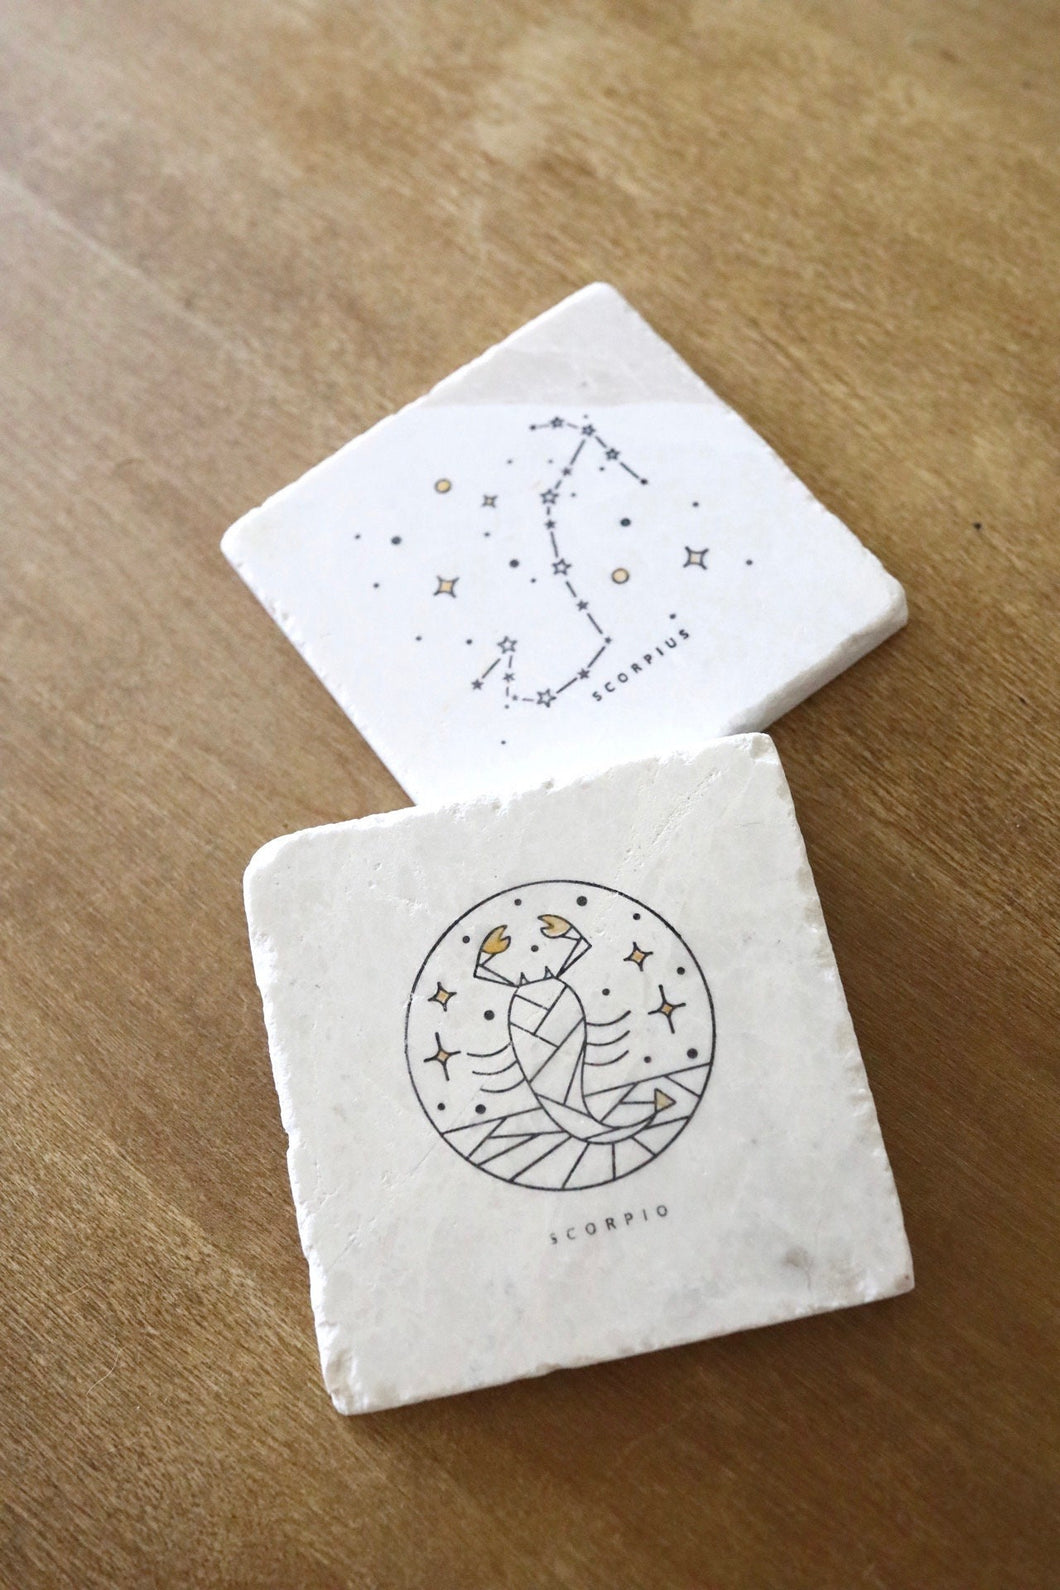 Scorpio Zodiac Sign Coasters. Scorpio gift, horoscope gift, marble coasters